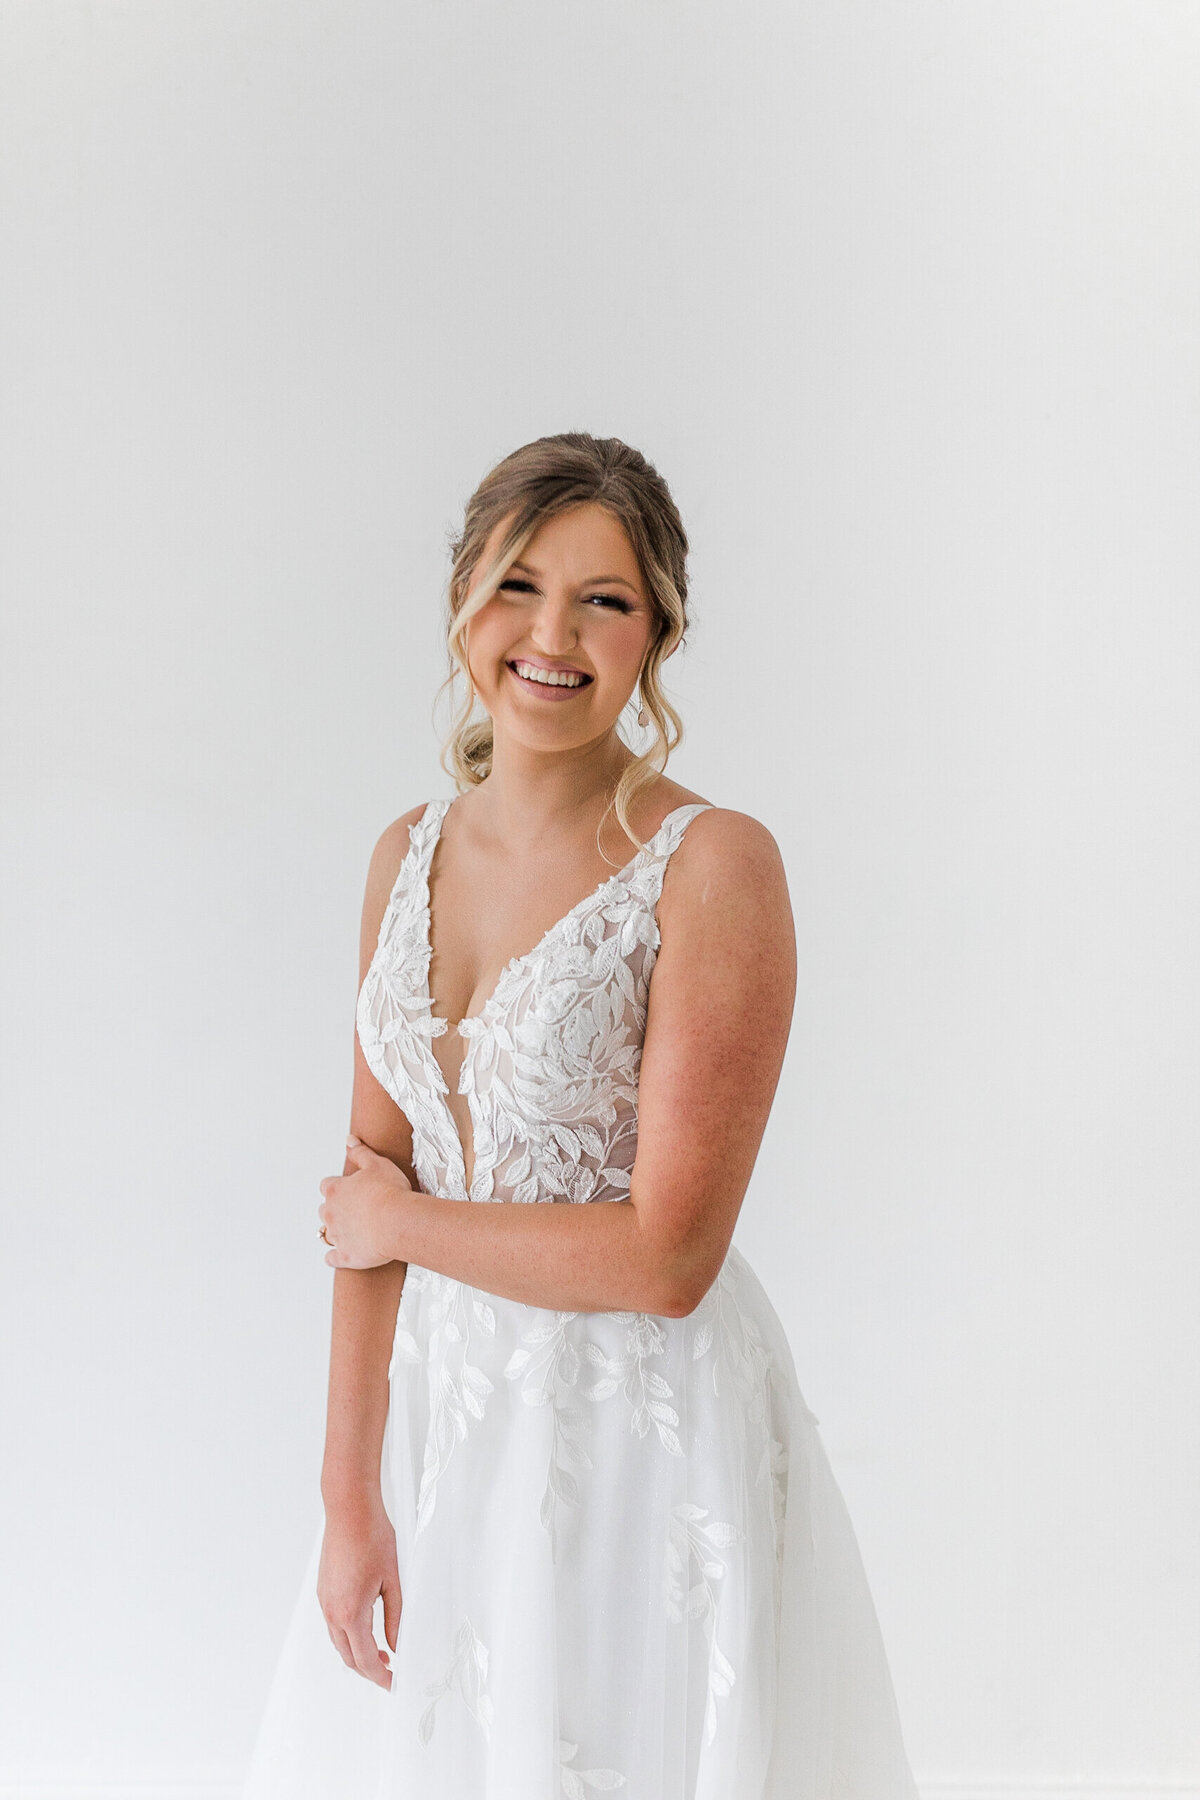 Marissa Reib Photography | Tulsa Wedding Photographer-33-2